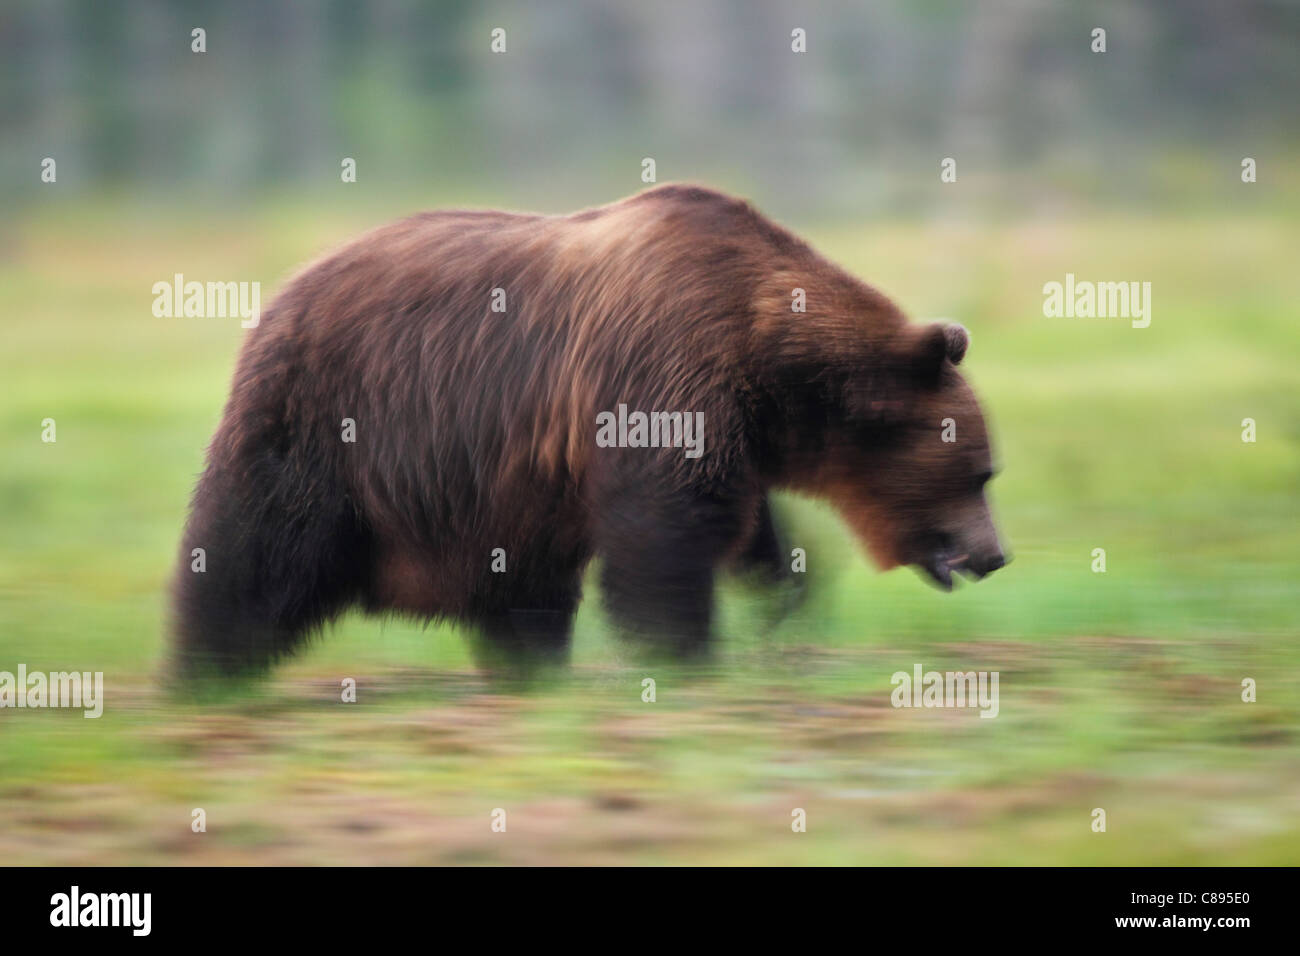 wild European bear (Ursus arctos) prowling around abstract showing movement Stock Photo